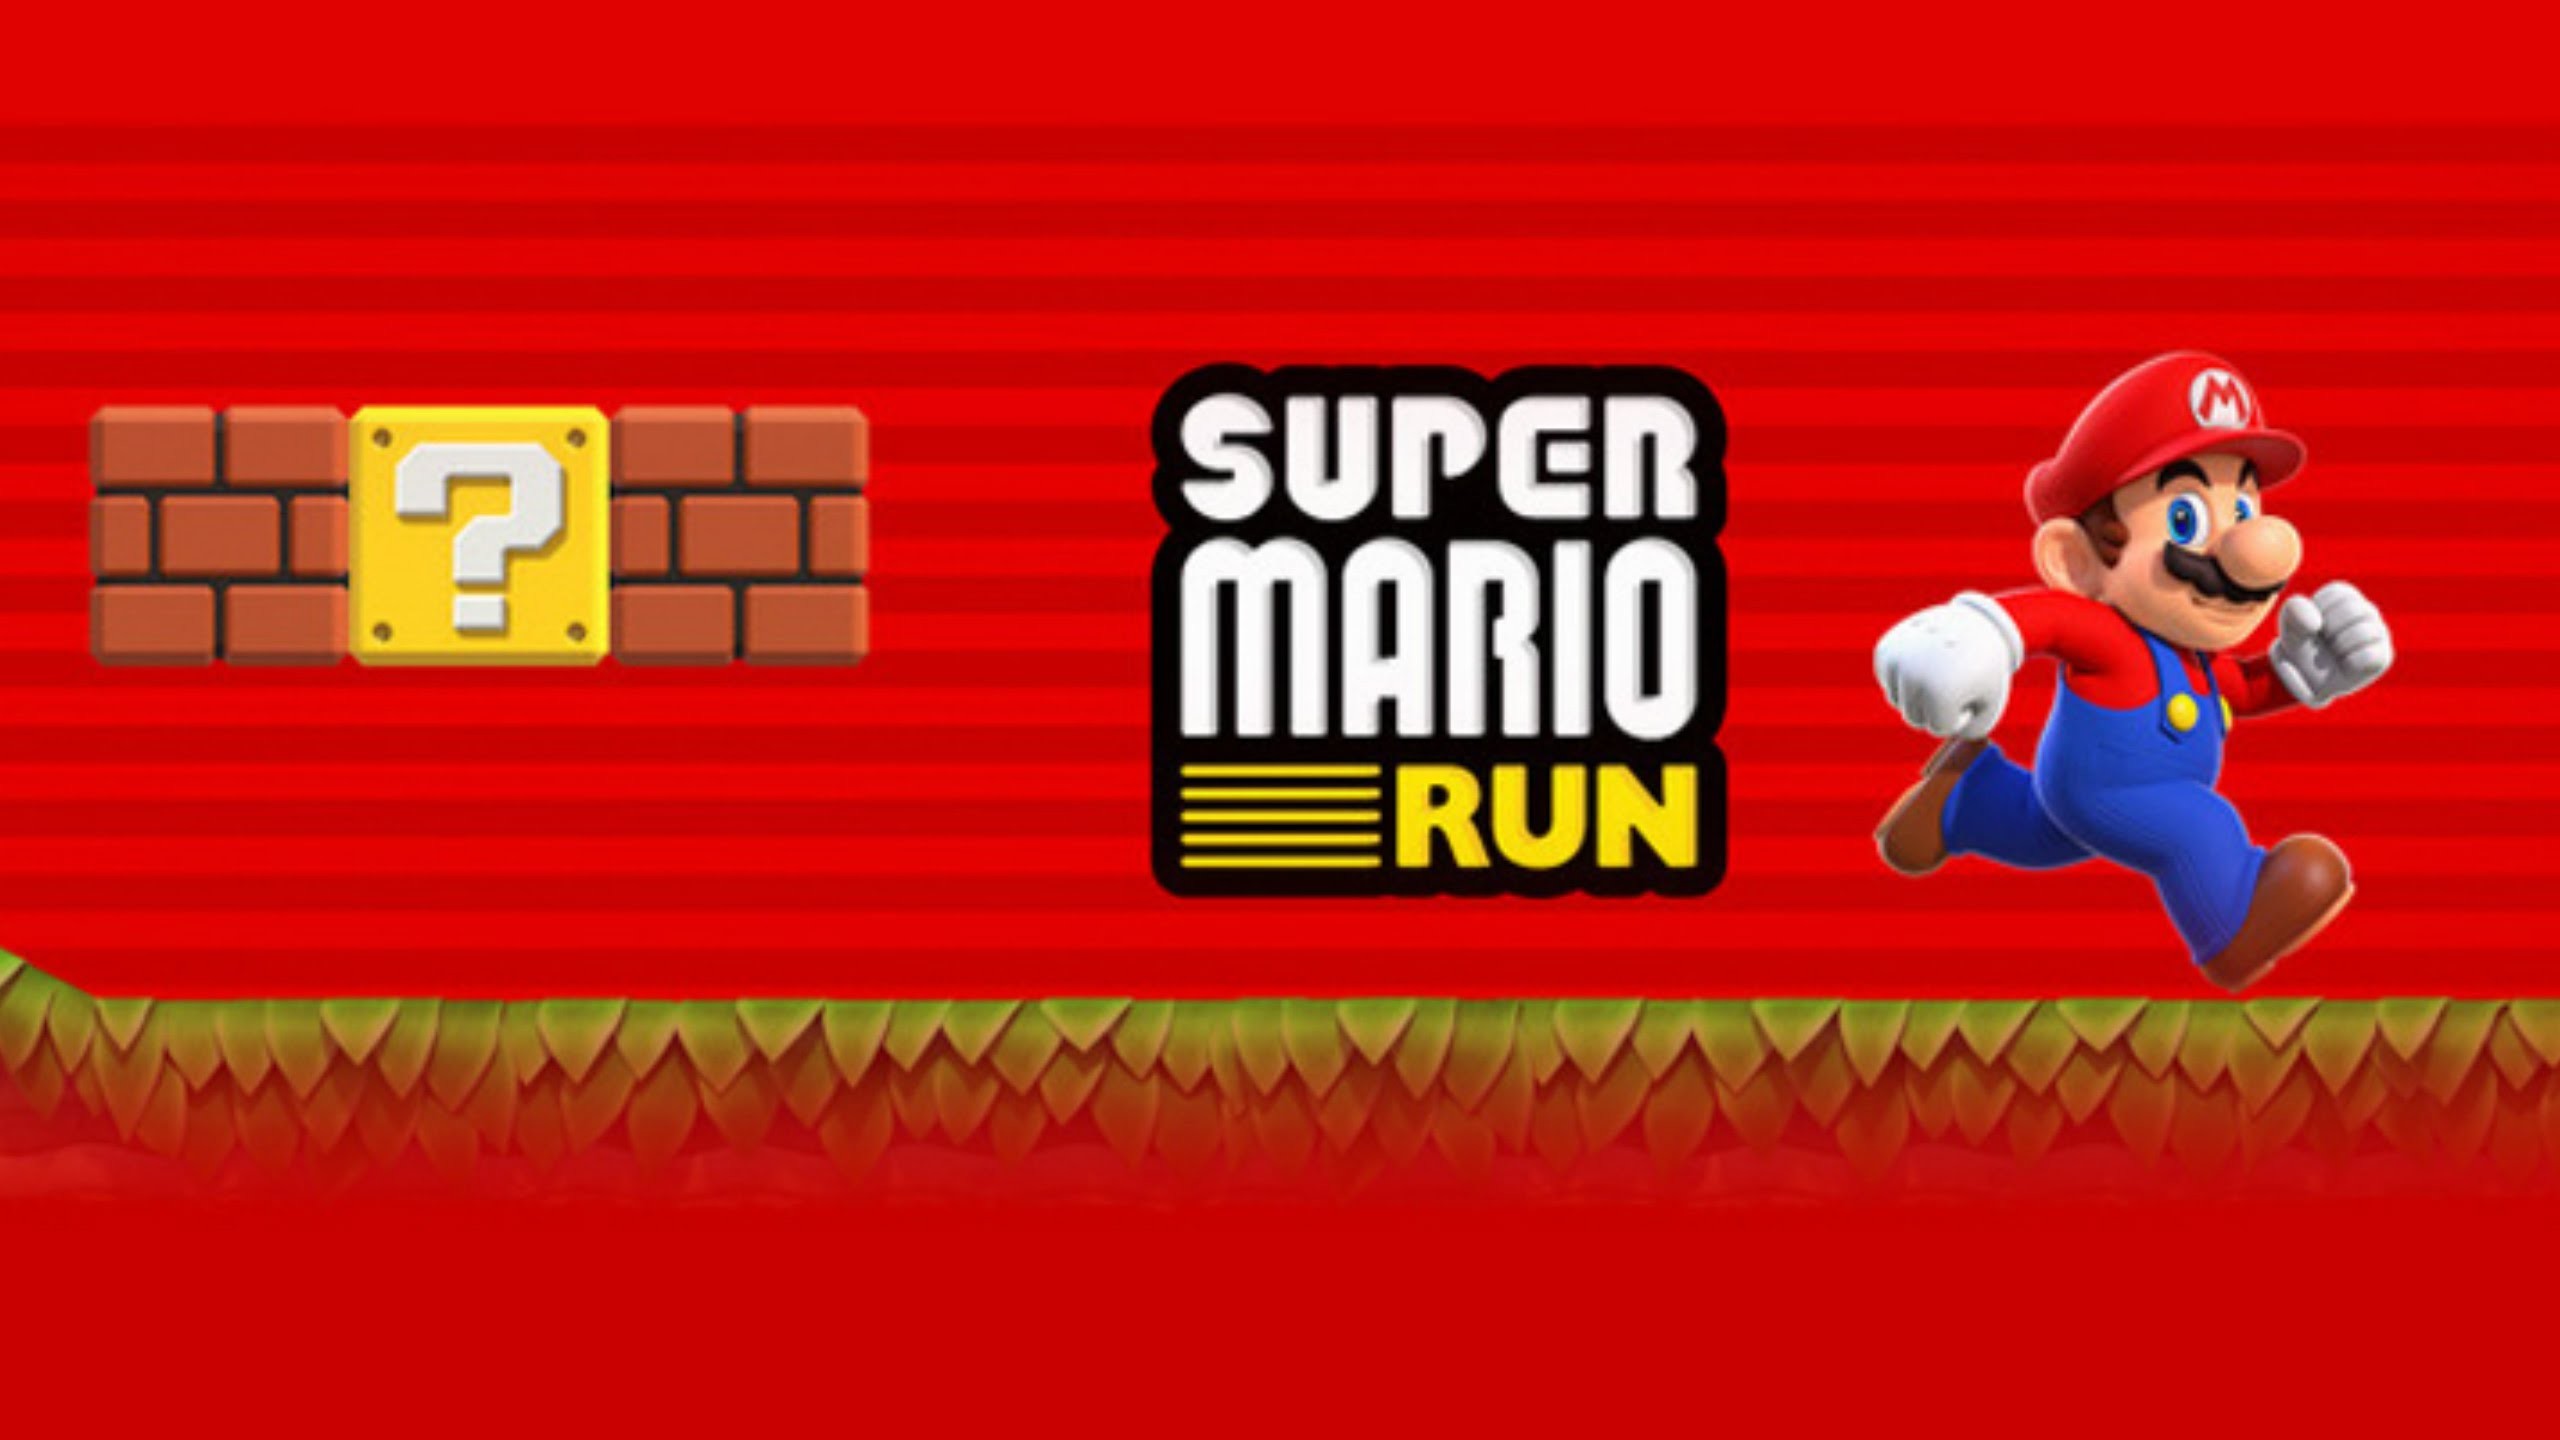 2560x1440 Super Mario Run (Apple) - Iphone - IOS | Demo Presentacion